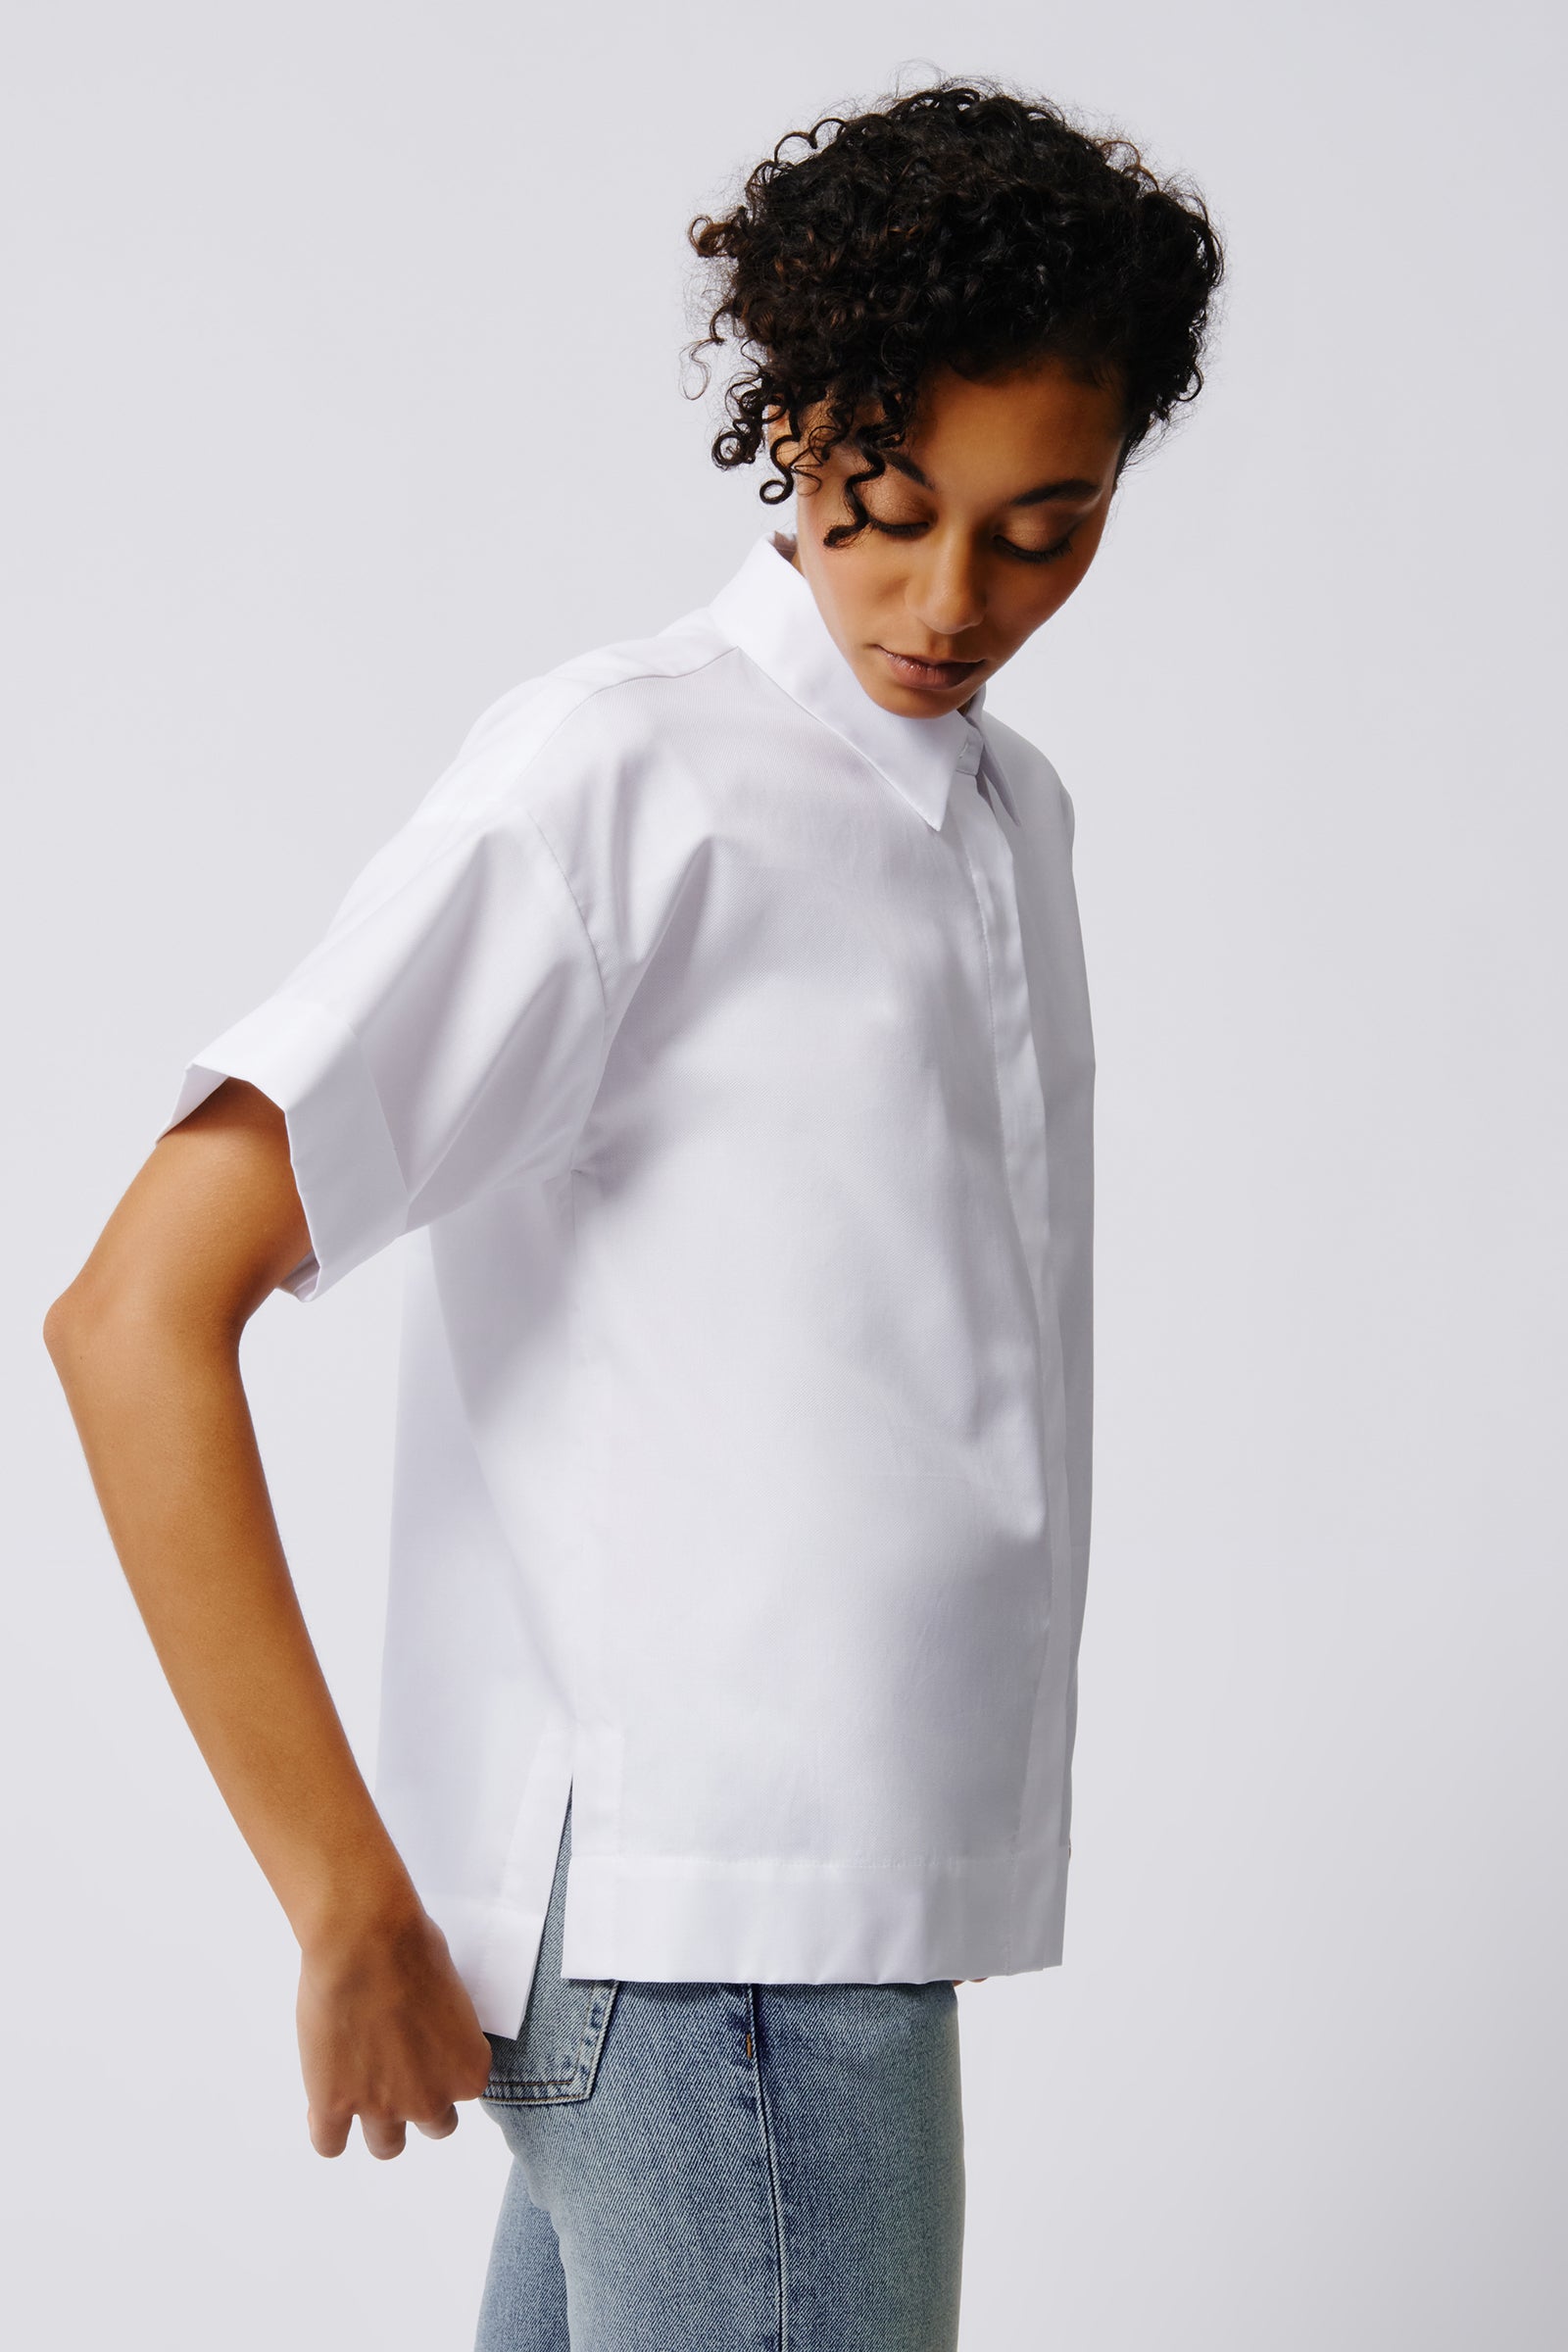 Kal Rieman Billie Cuffed Short Sleeve Shirt in White on Model Side View Crop